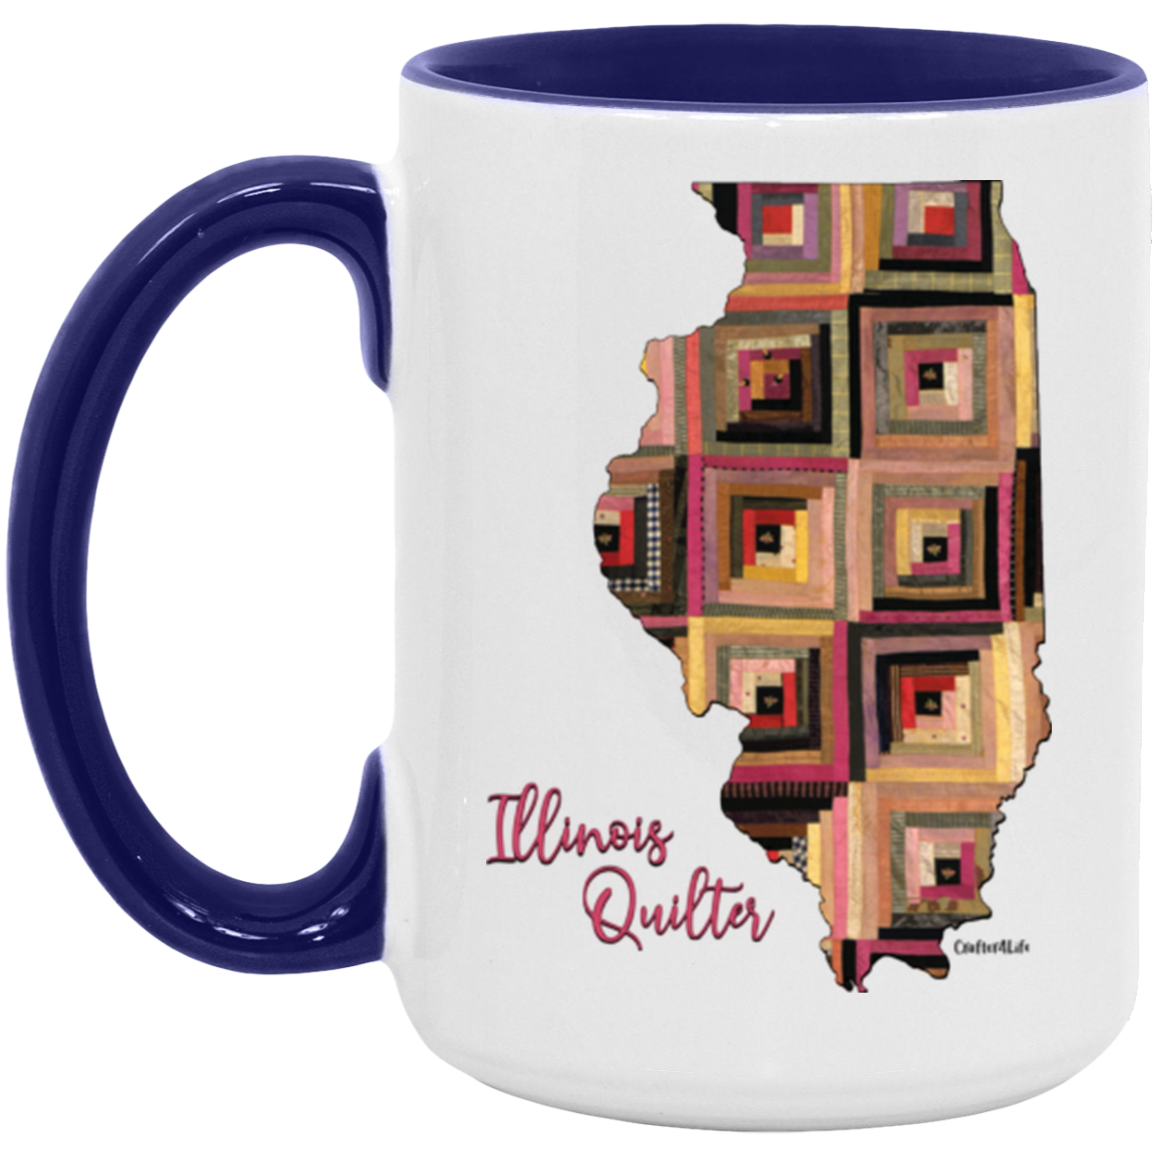 Illinois Quilter Mugs